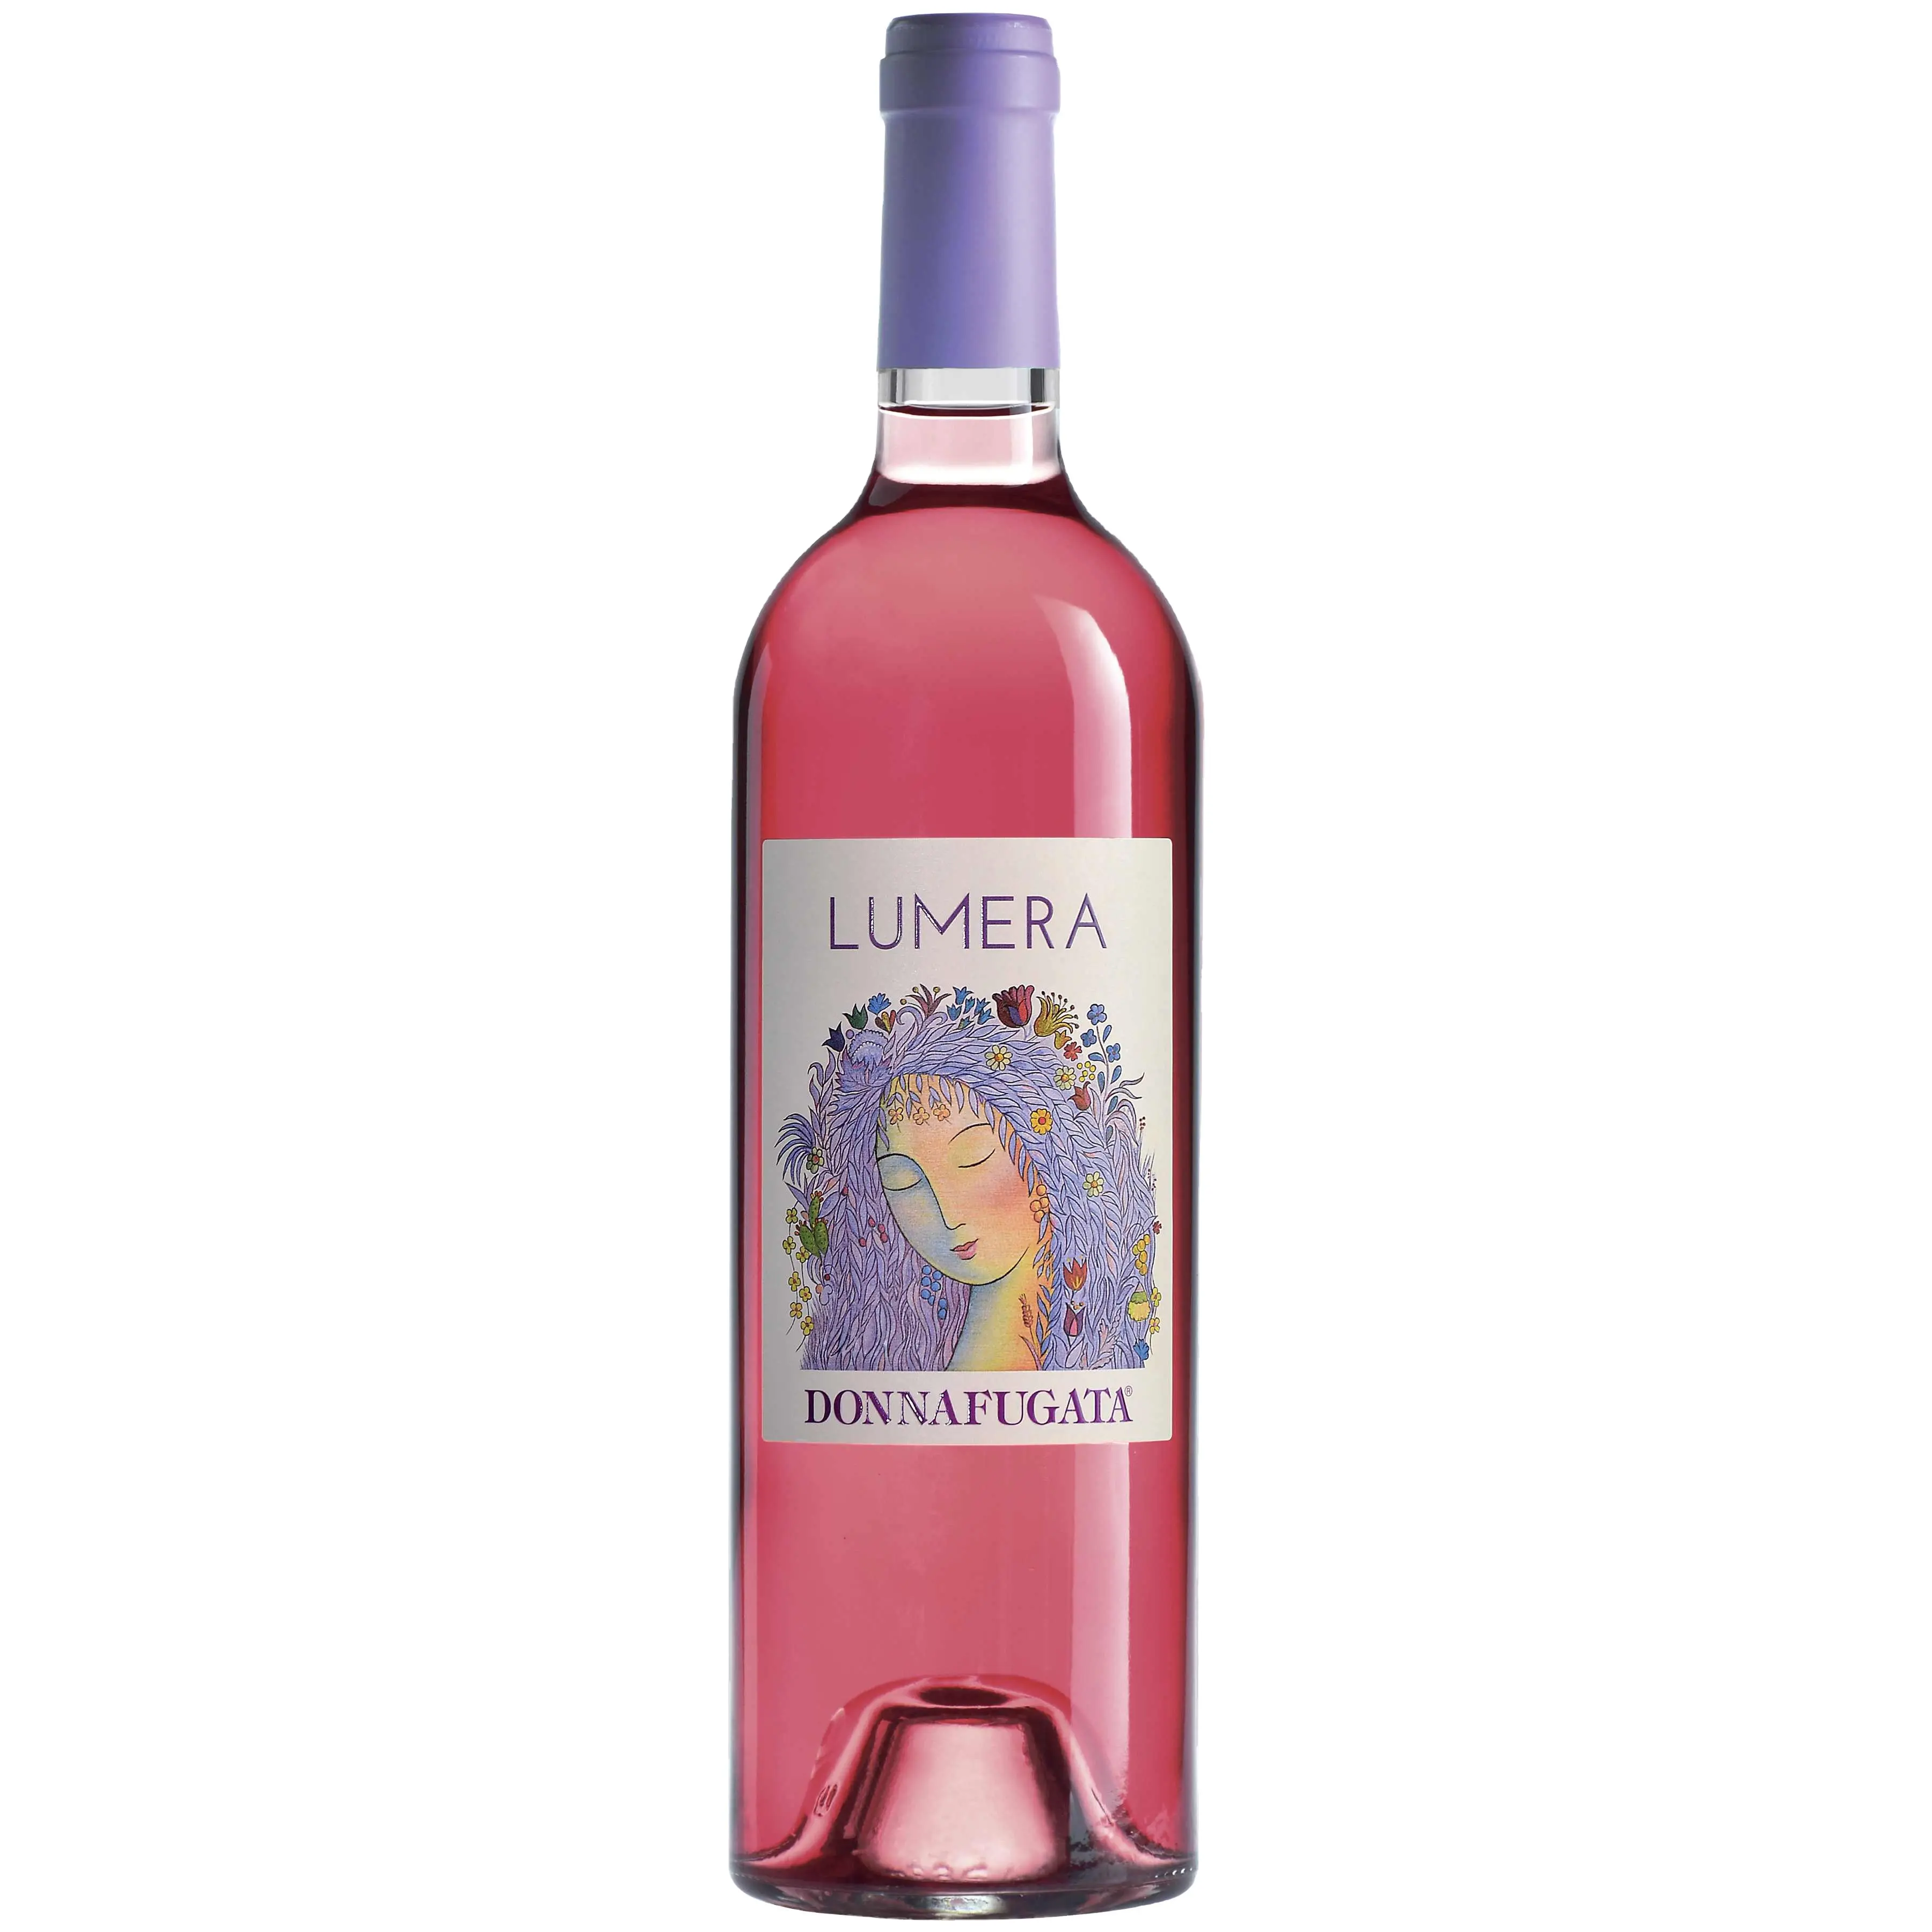 Premium Quality Best selling Italian producer Donnafugata Lumera Sicilia DOC Rose Wine for aperitif table wine